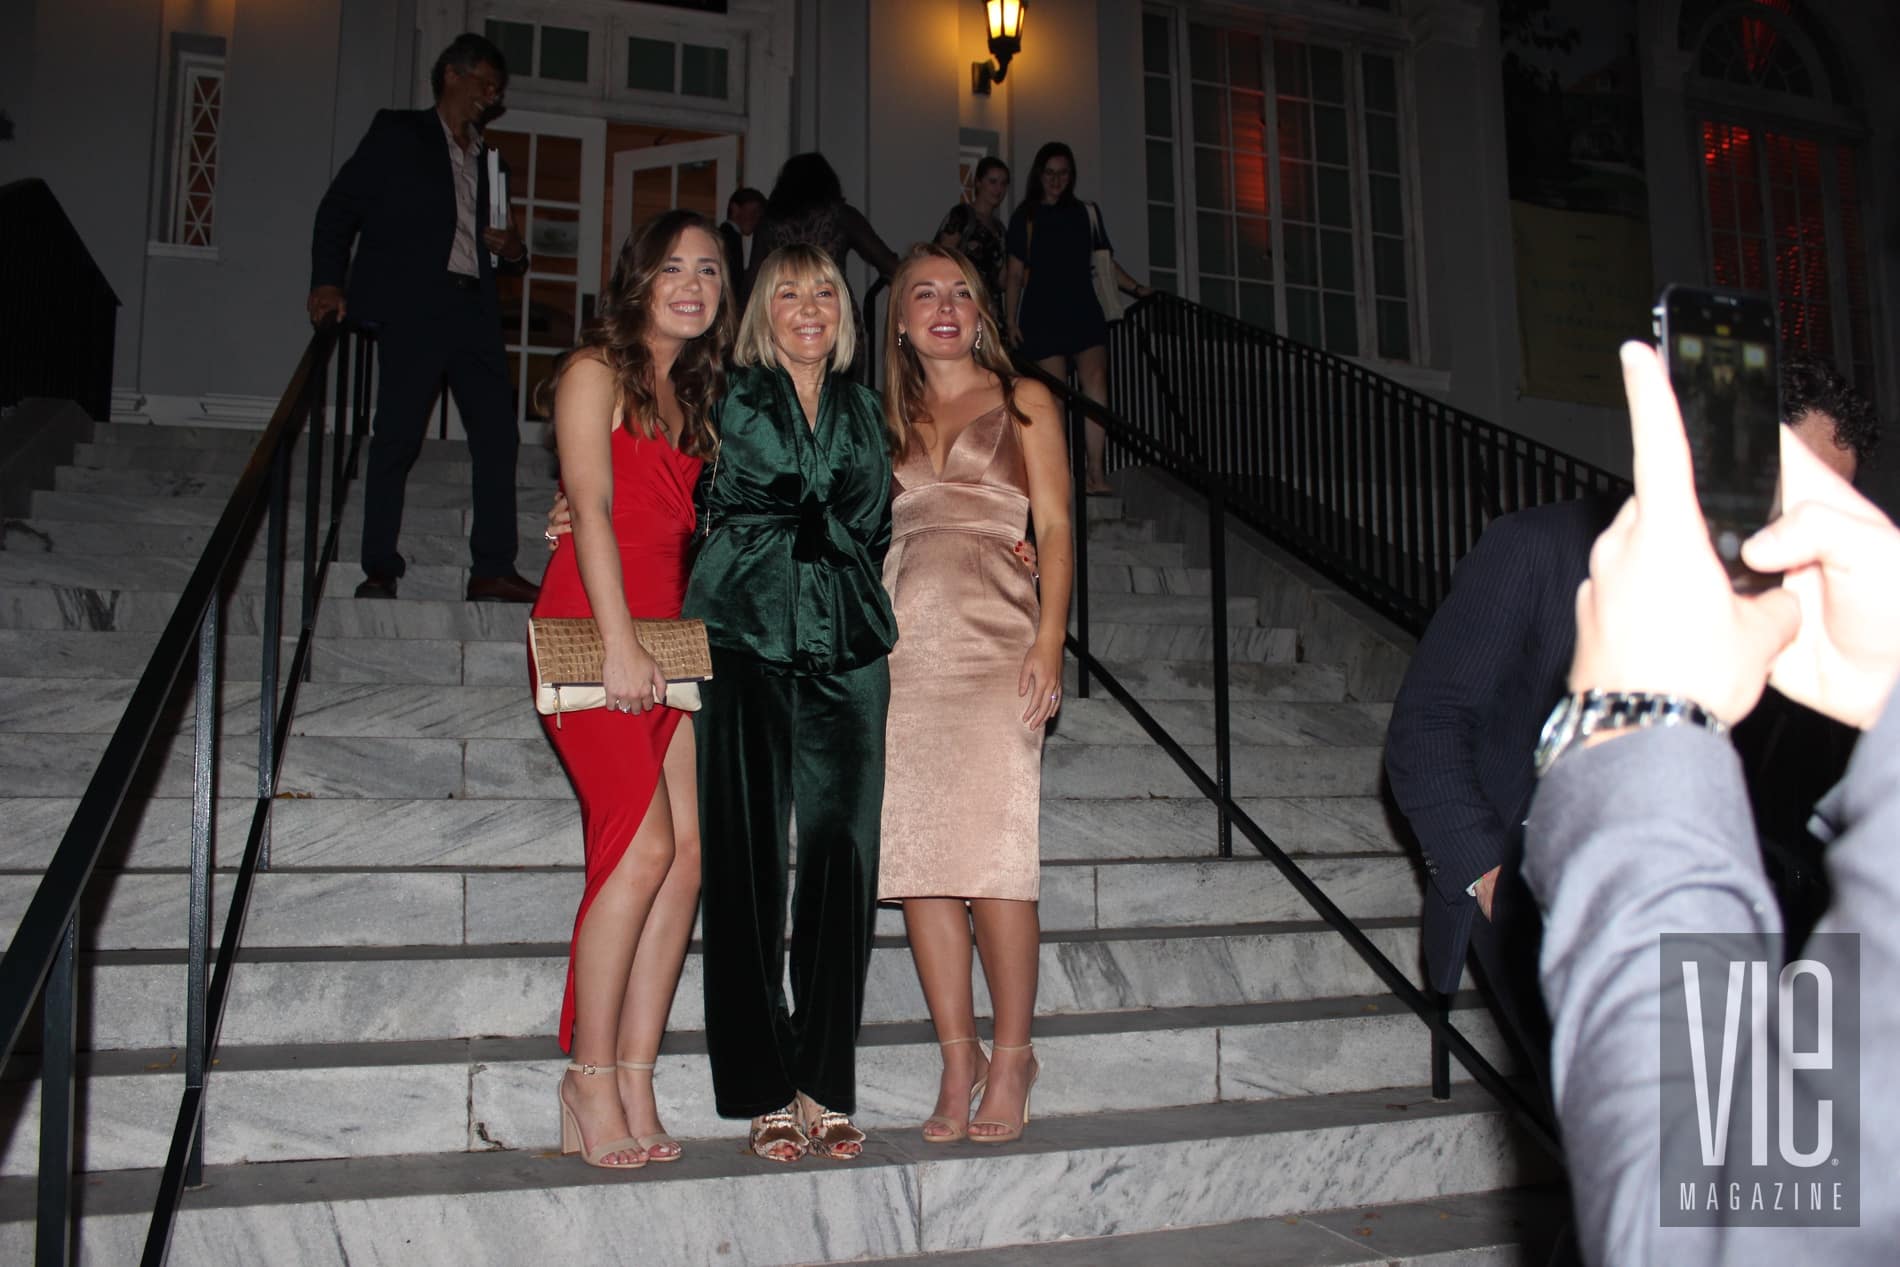 VIE magazine Abigail Ryan, Lisa Burwell, and Meghan Ryan on the steps at Charleston Library Society